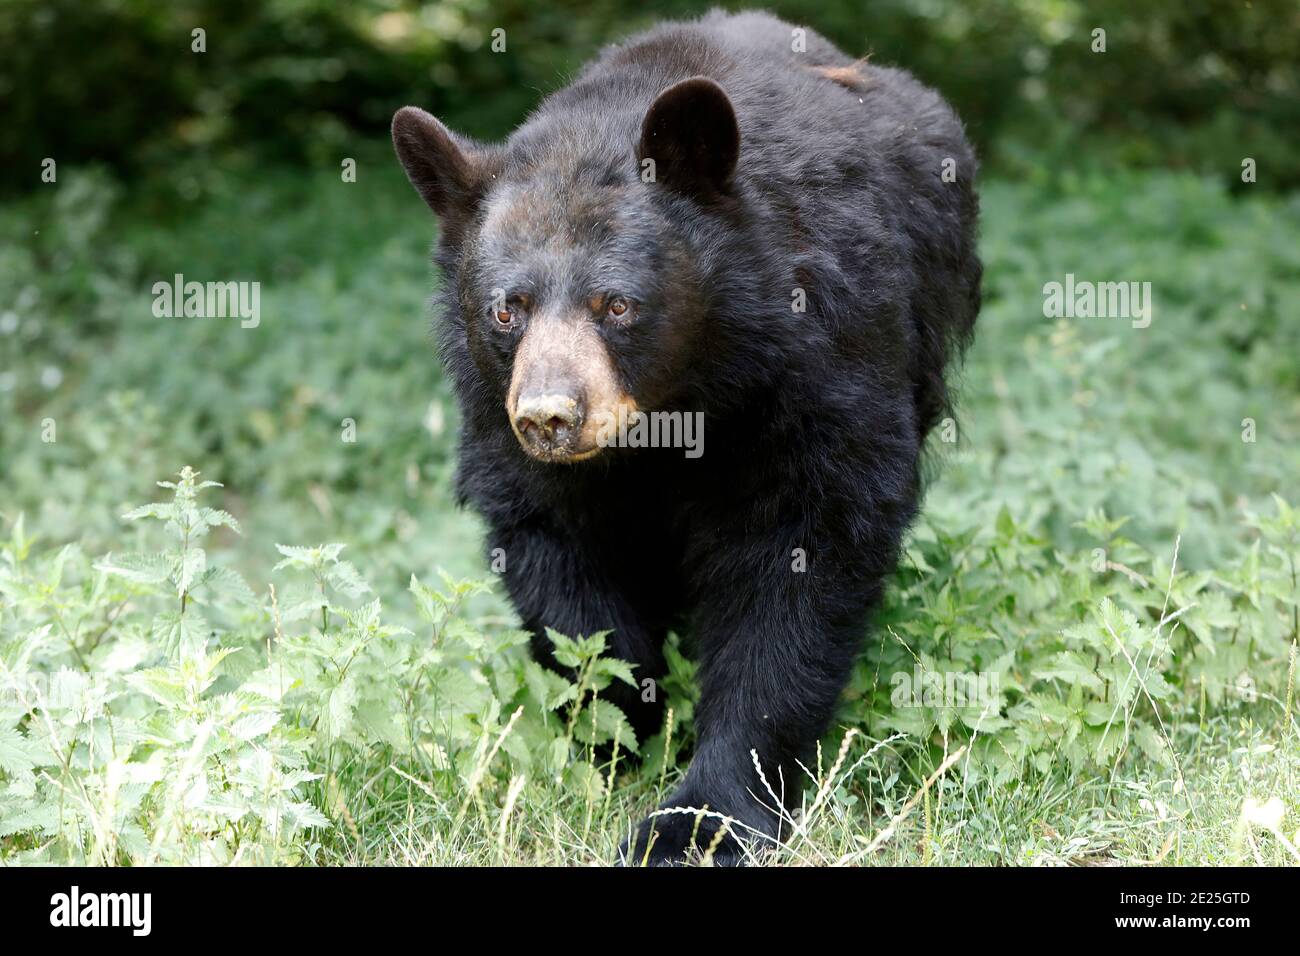 American bear (URSUS AMERICANUS) in Thoiry zoo park, France Stock Photo